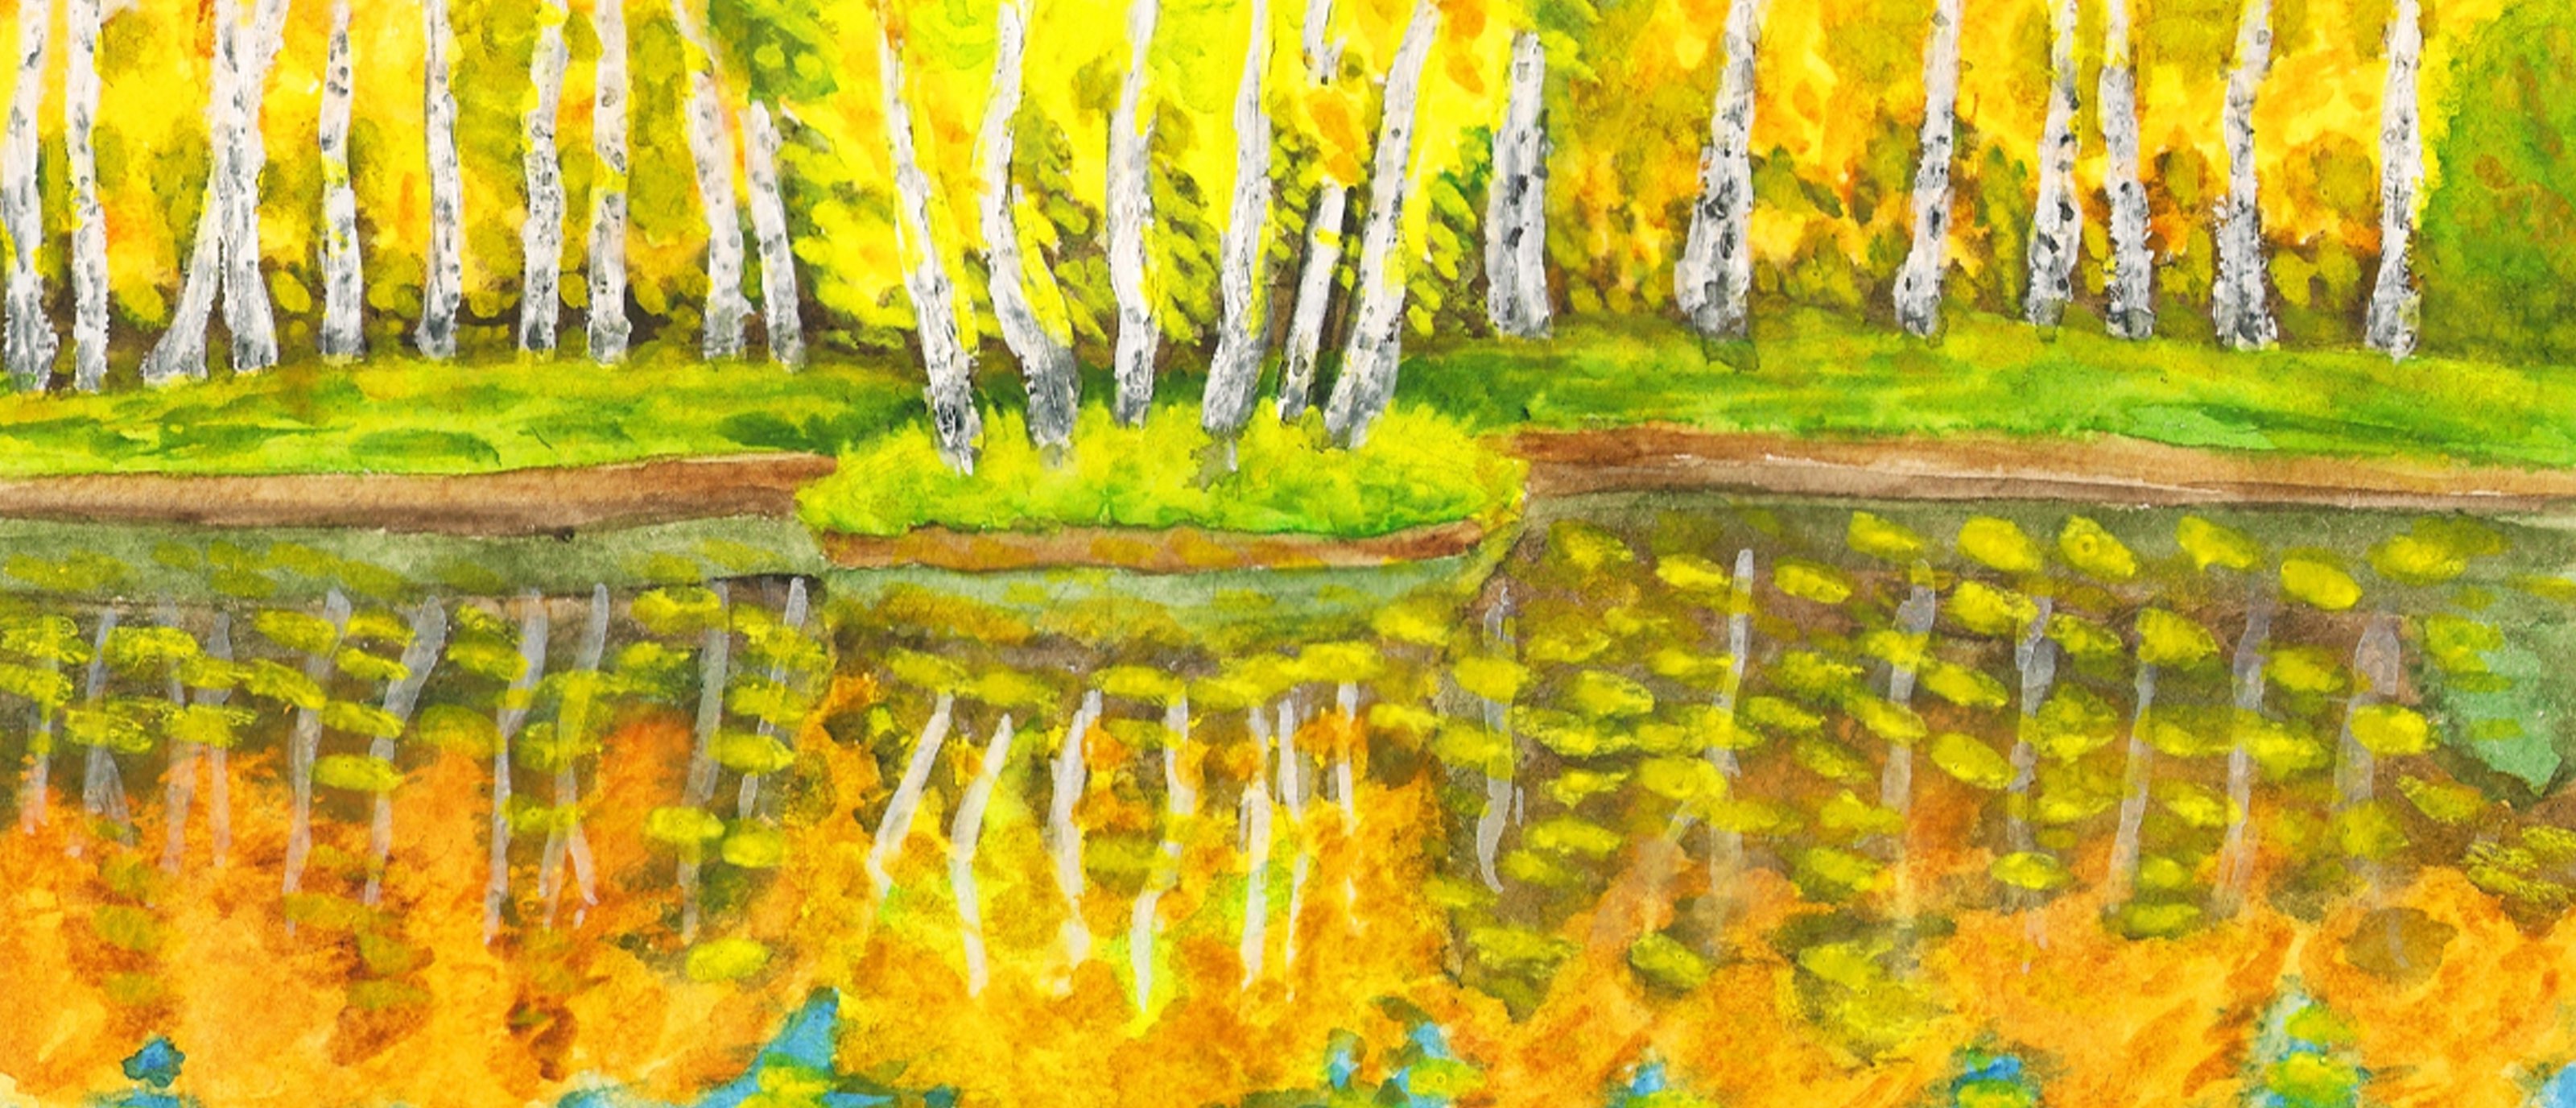 Irina Afonskaya / Autumn landscape with island with yellow birches / 2012